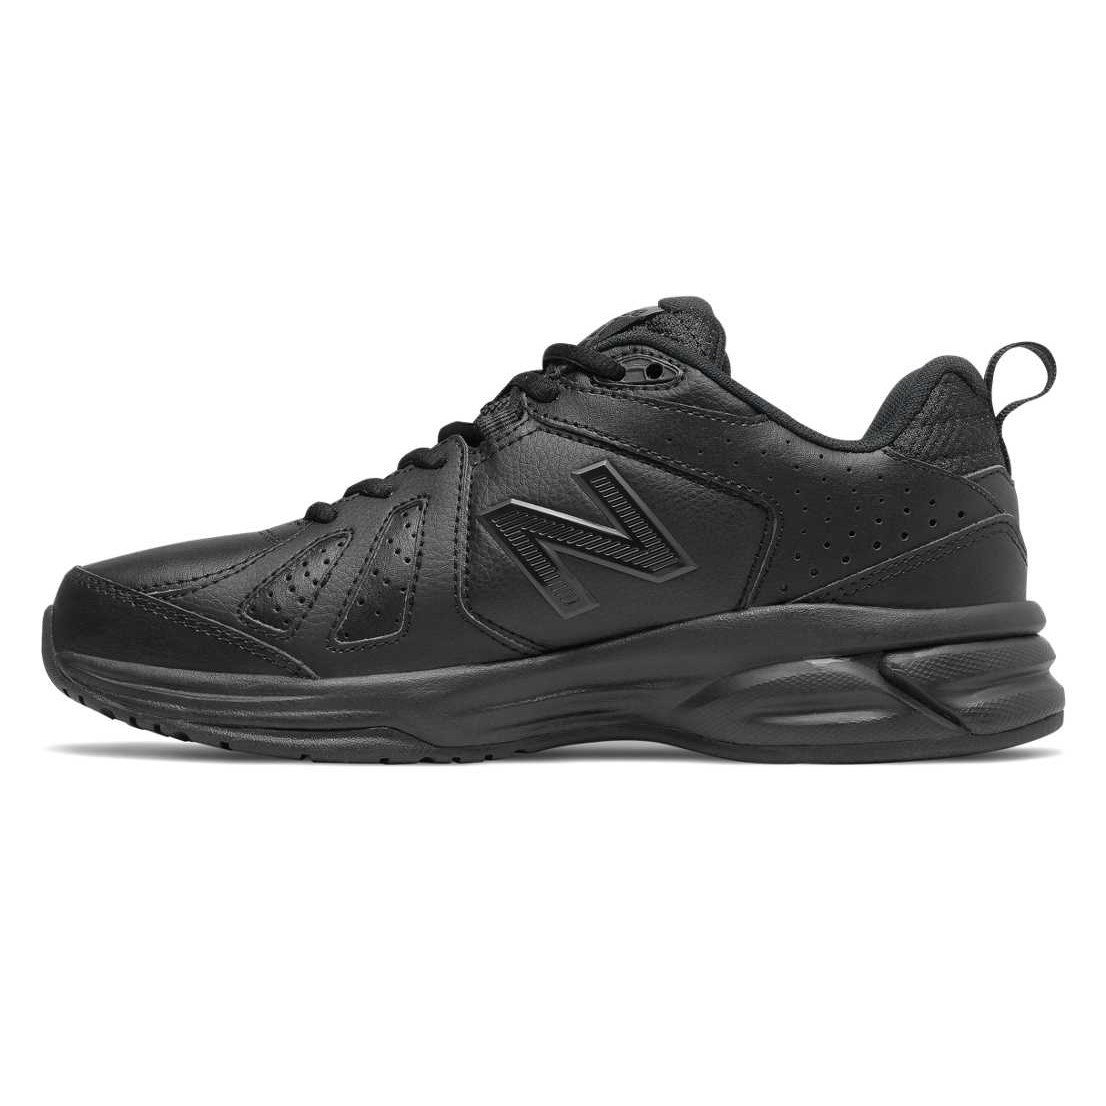 New Balance 624v5 - Womens Cross Training Shoes - Black | Sportitude